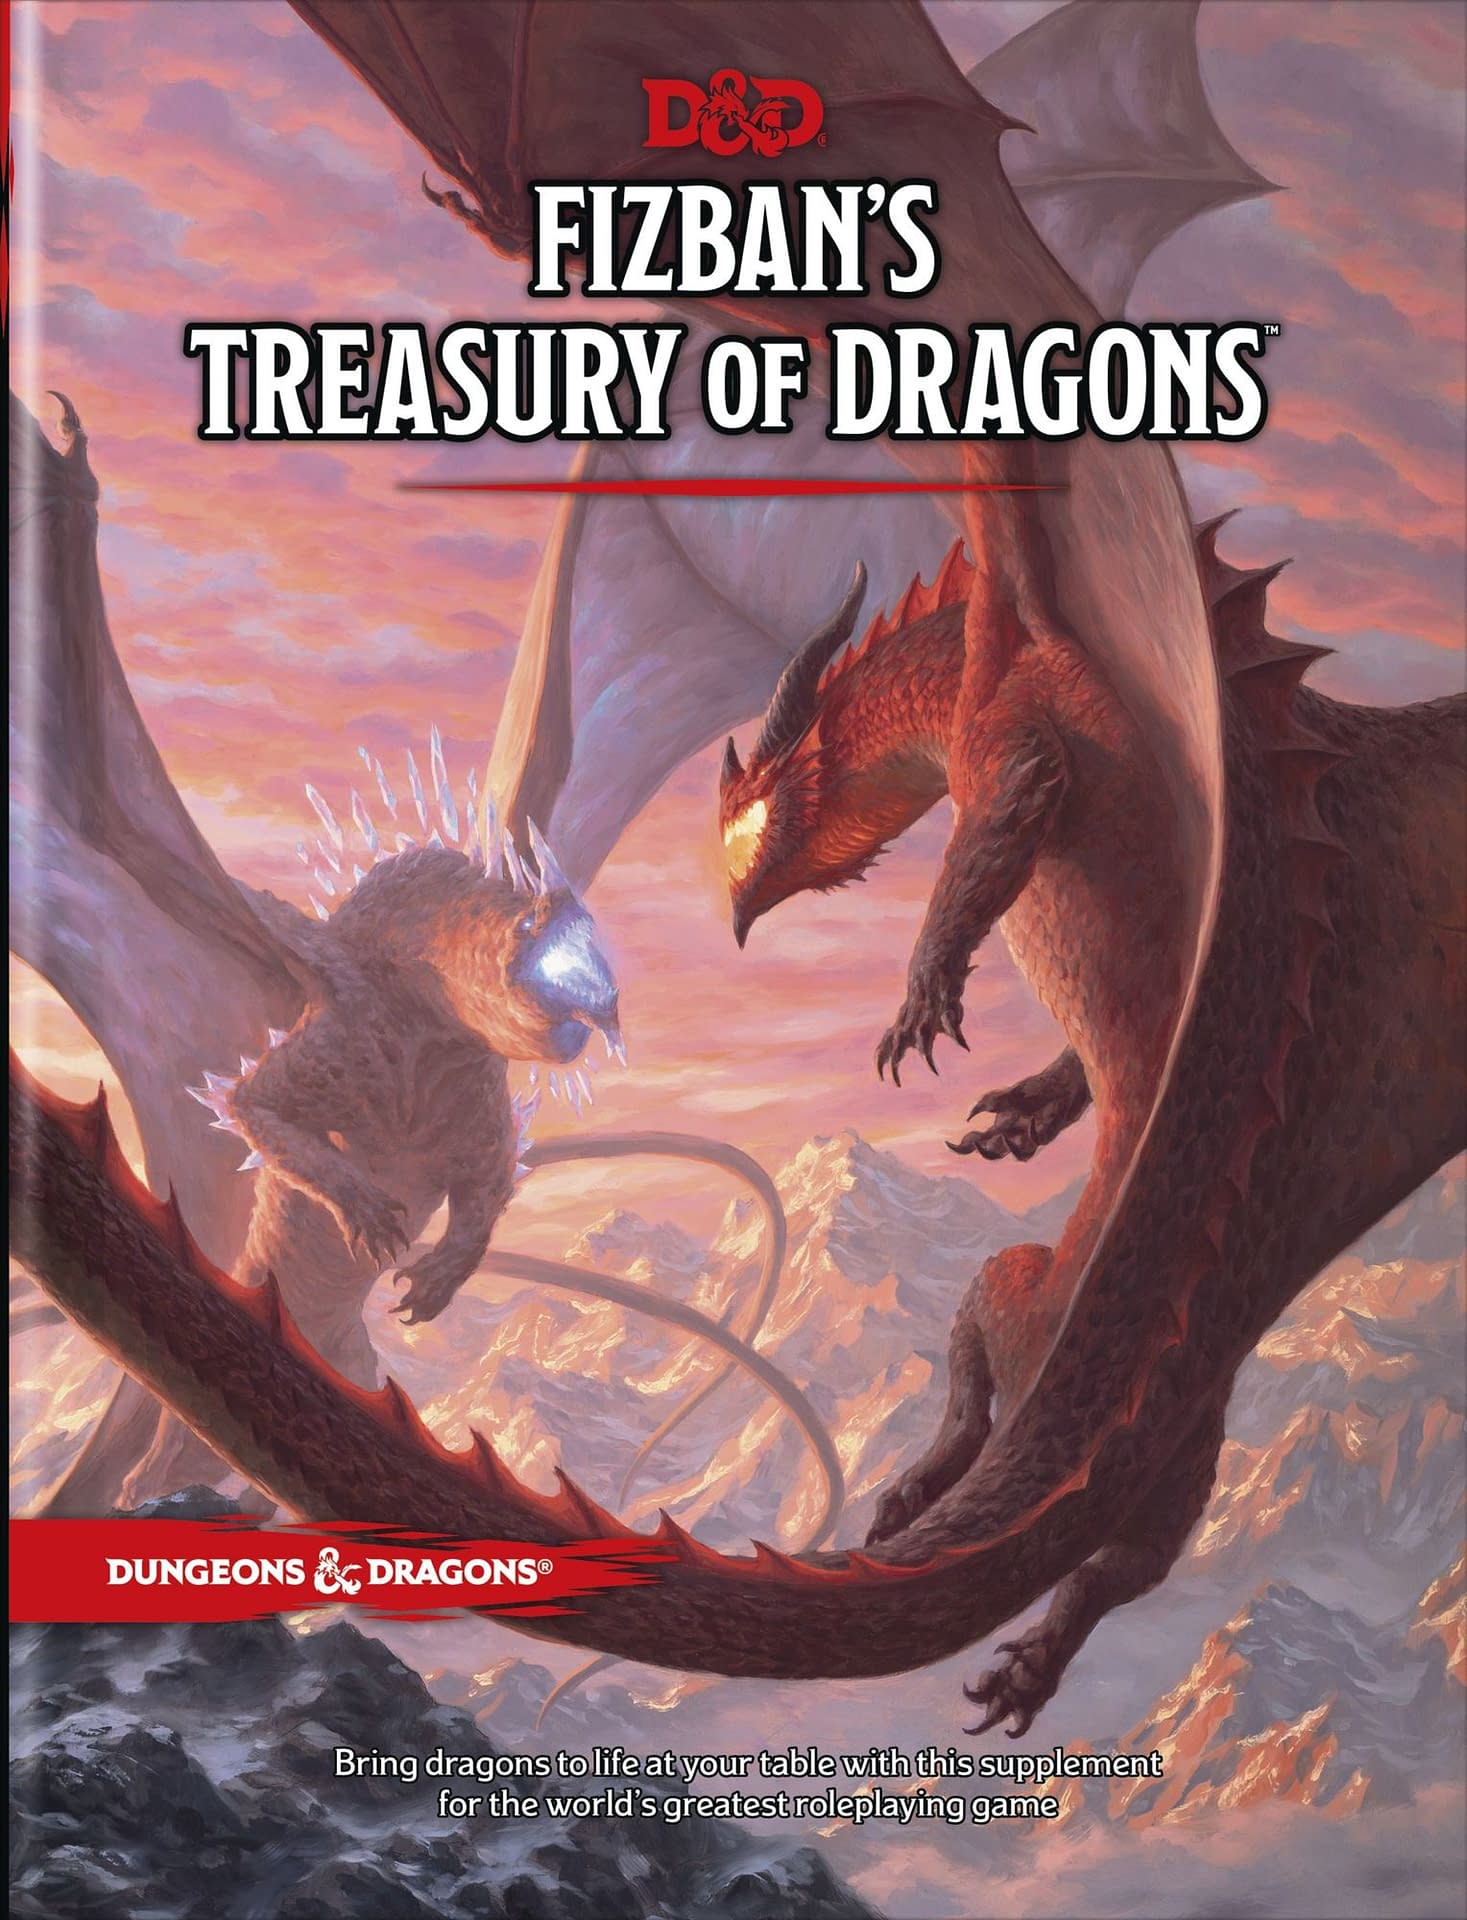 The Wizard Class for Dungeons & Dragons (D&D) Fifth Edition (5e) - D&D  Beyond